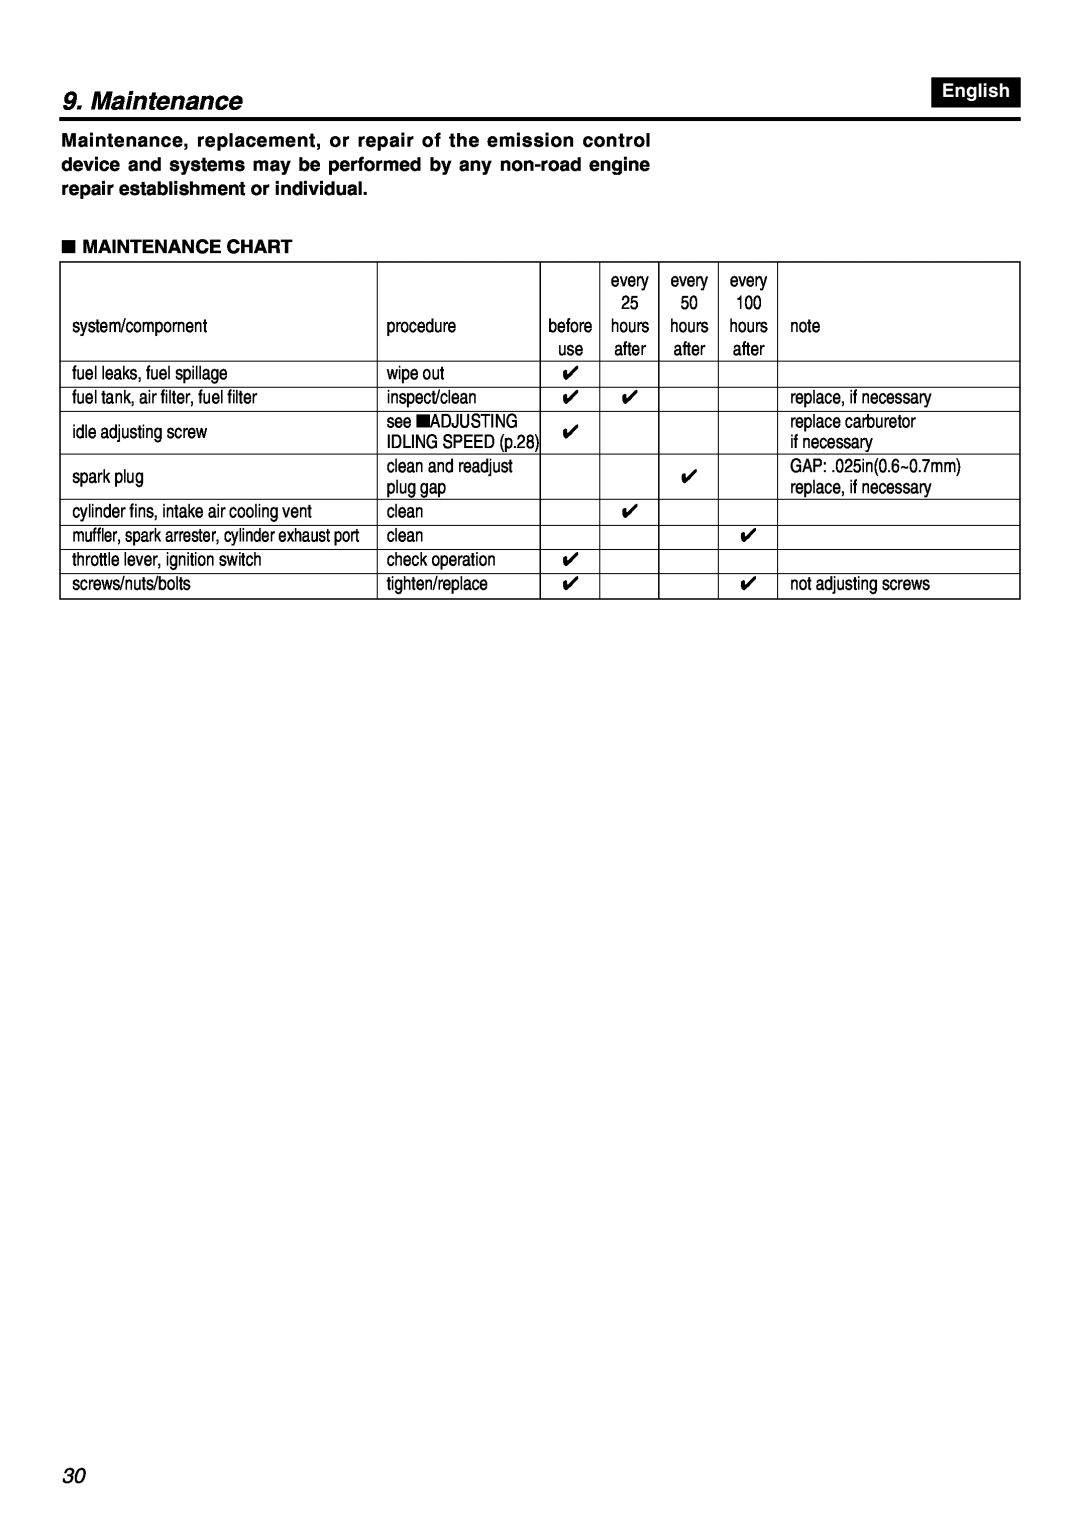 RedMax HBZ2601 manual English, Maintenance Chart 